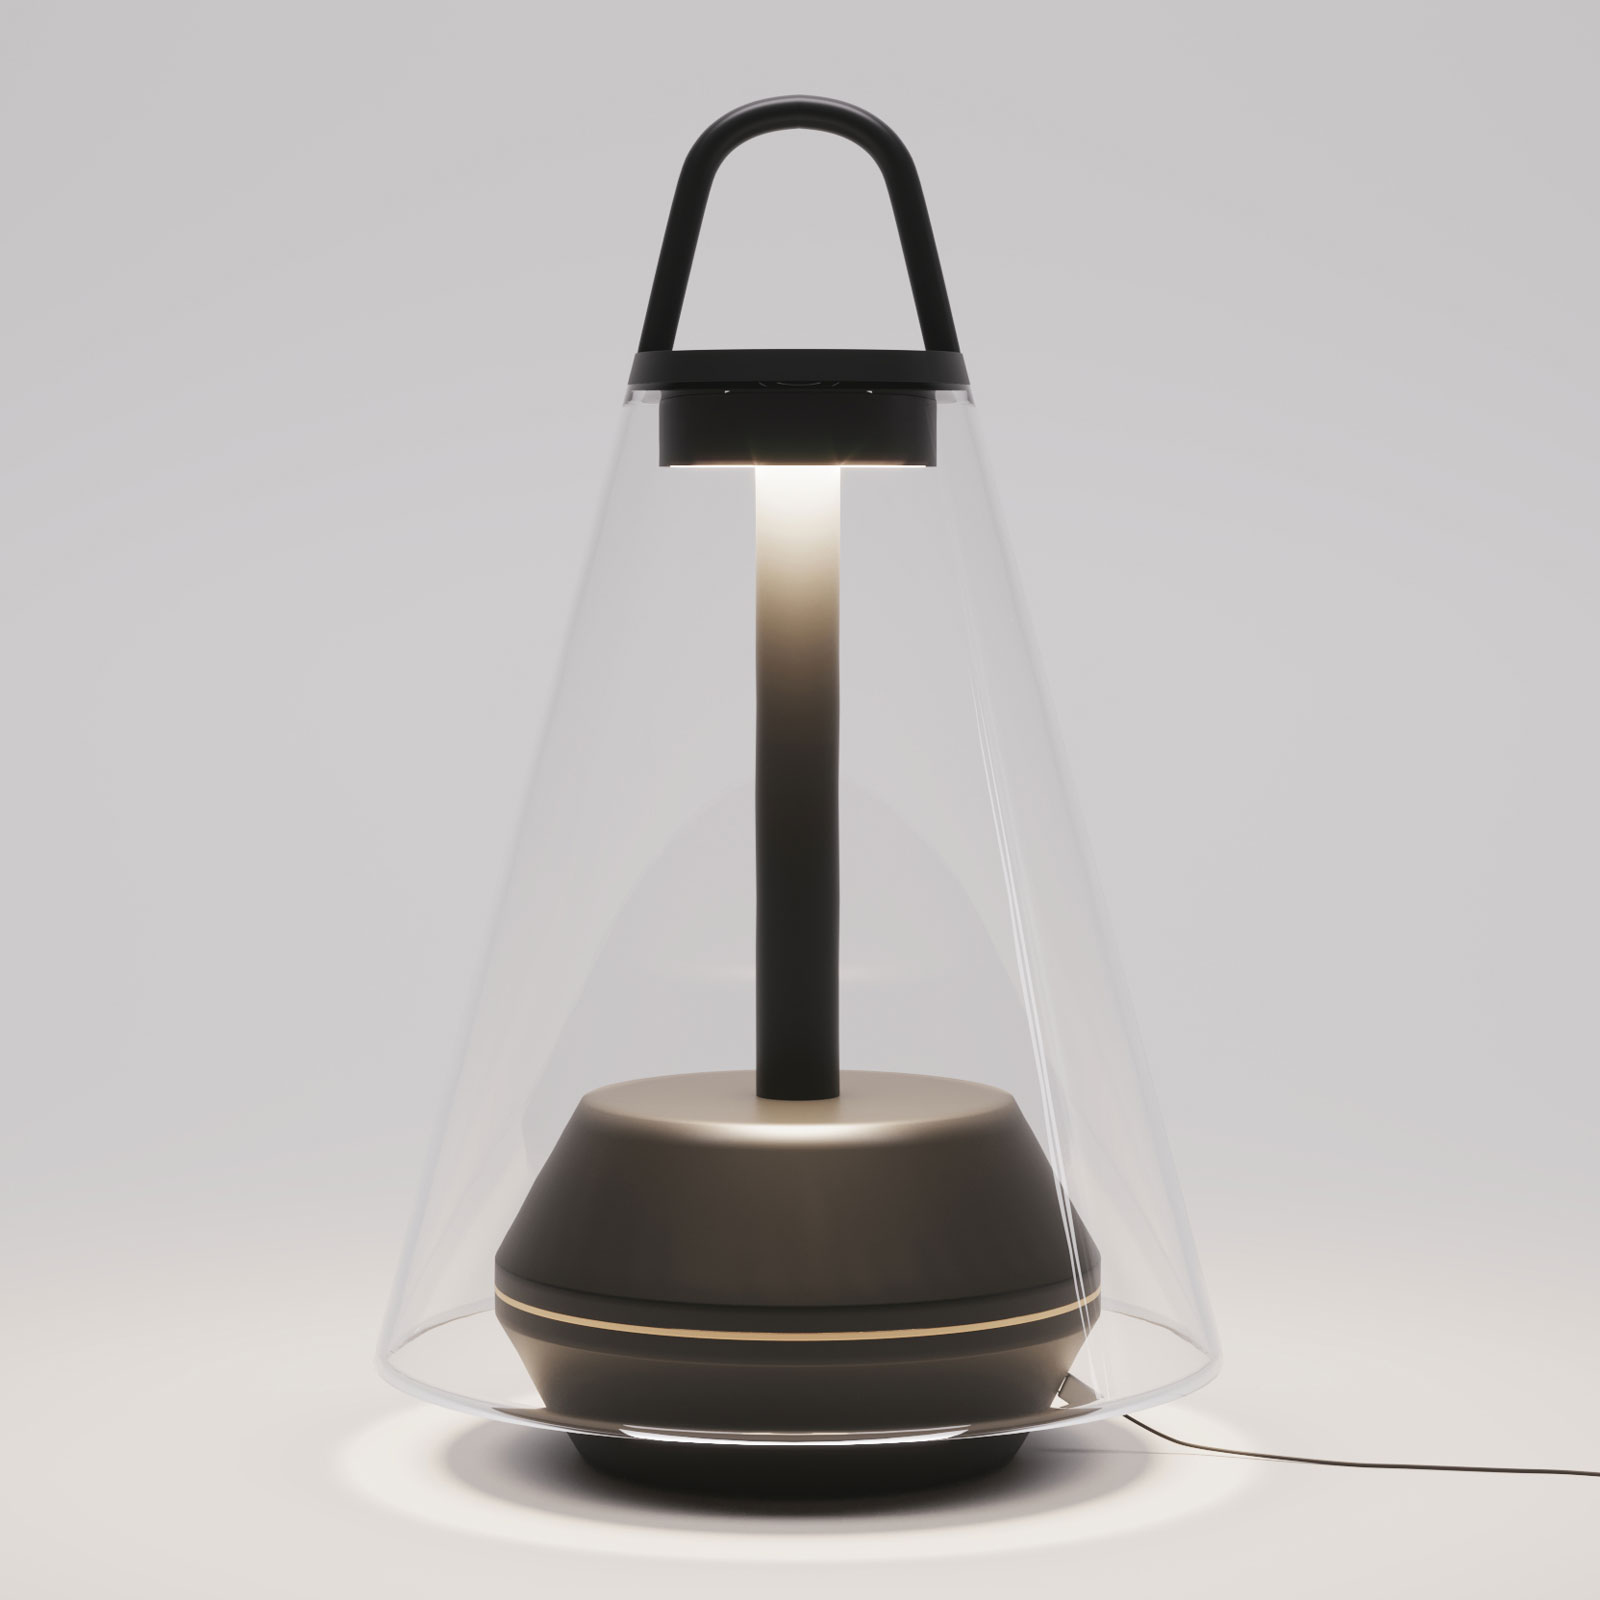 Prandina Shuttle table lamp black, clear glass